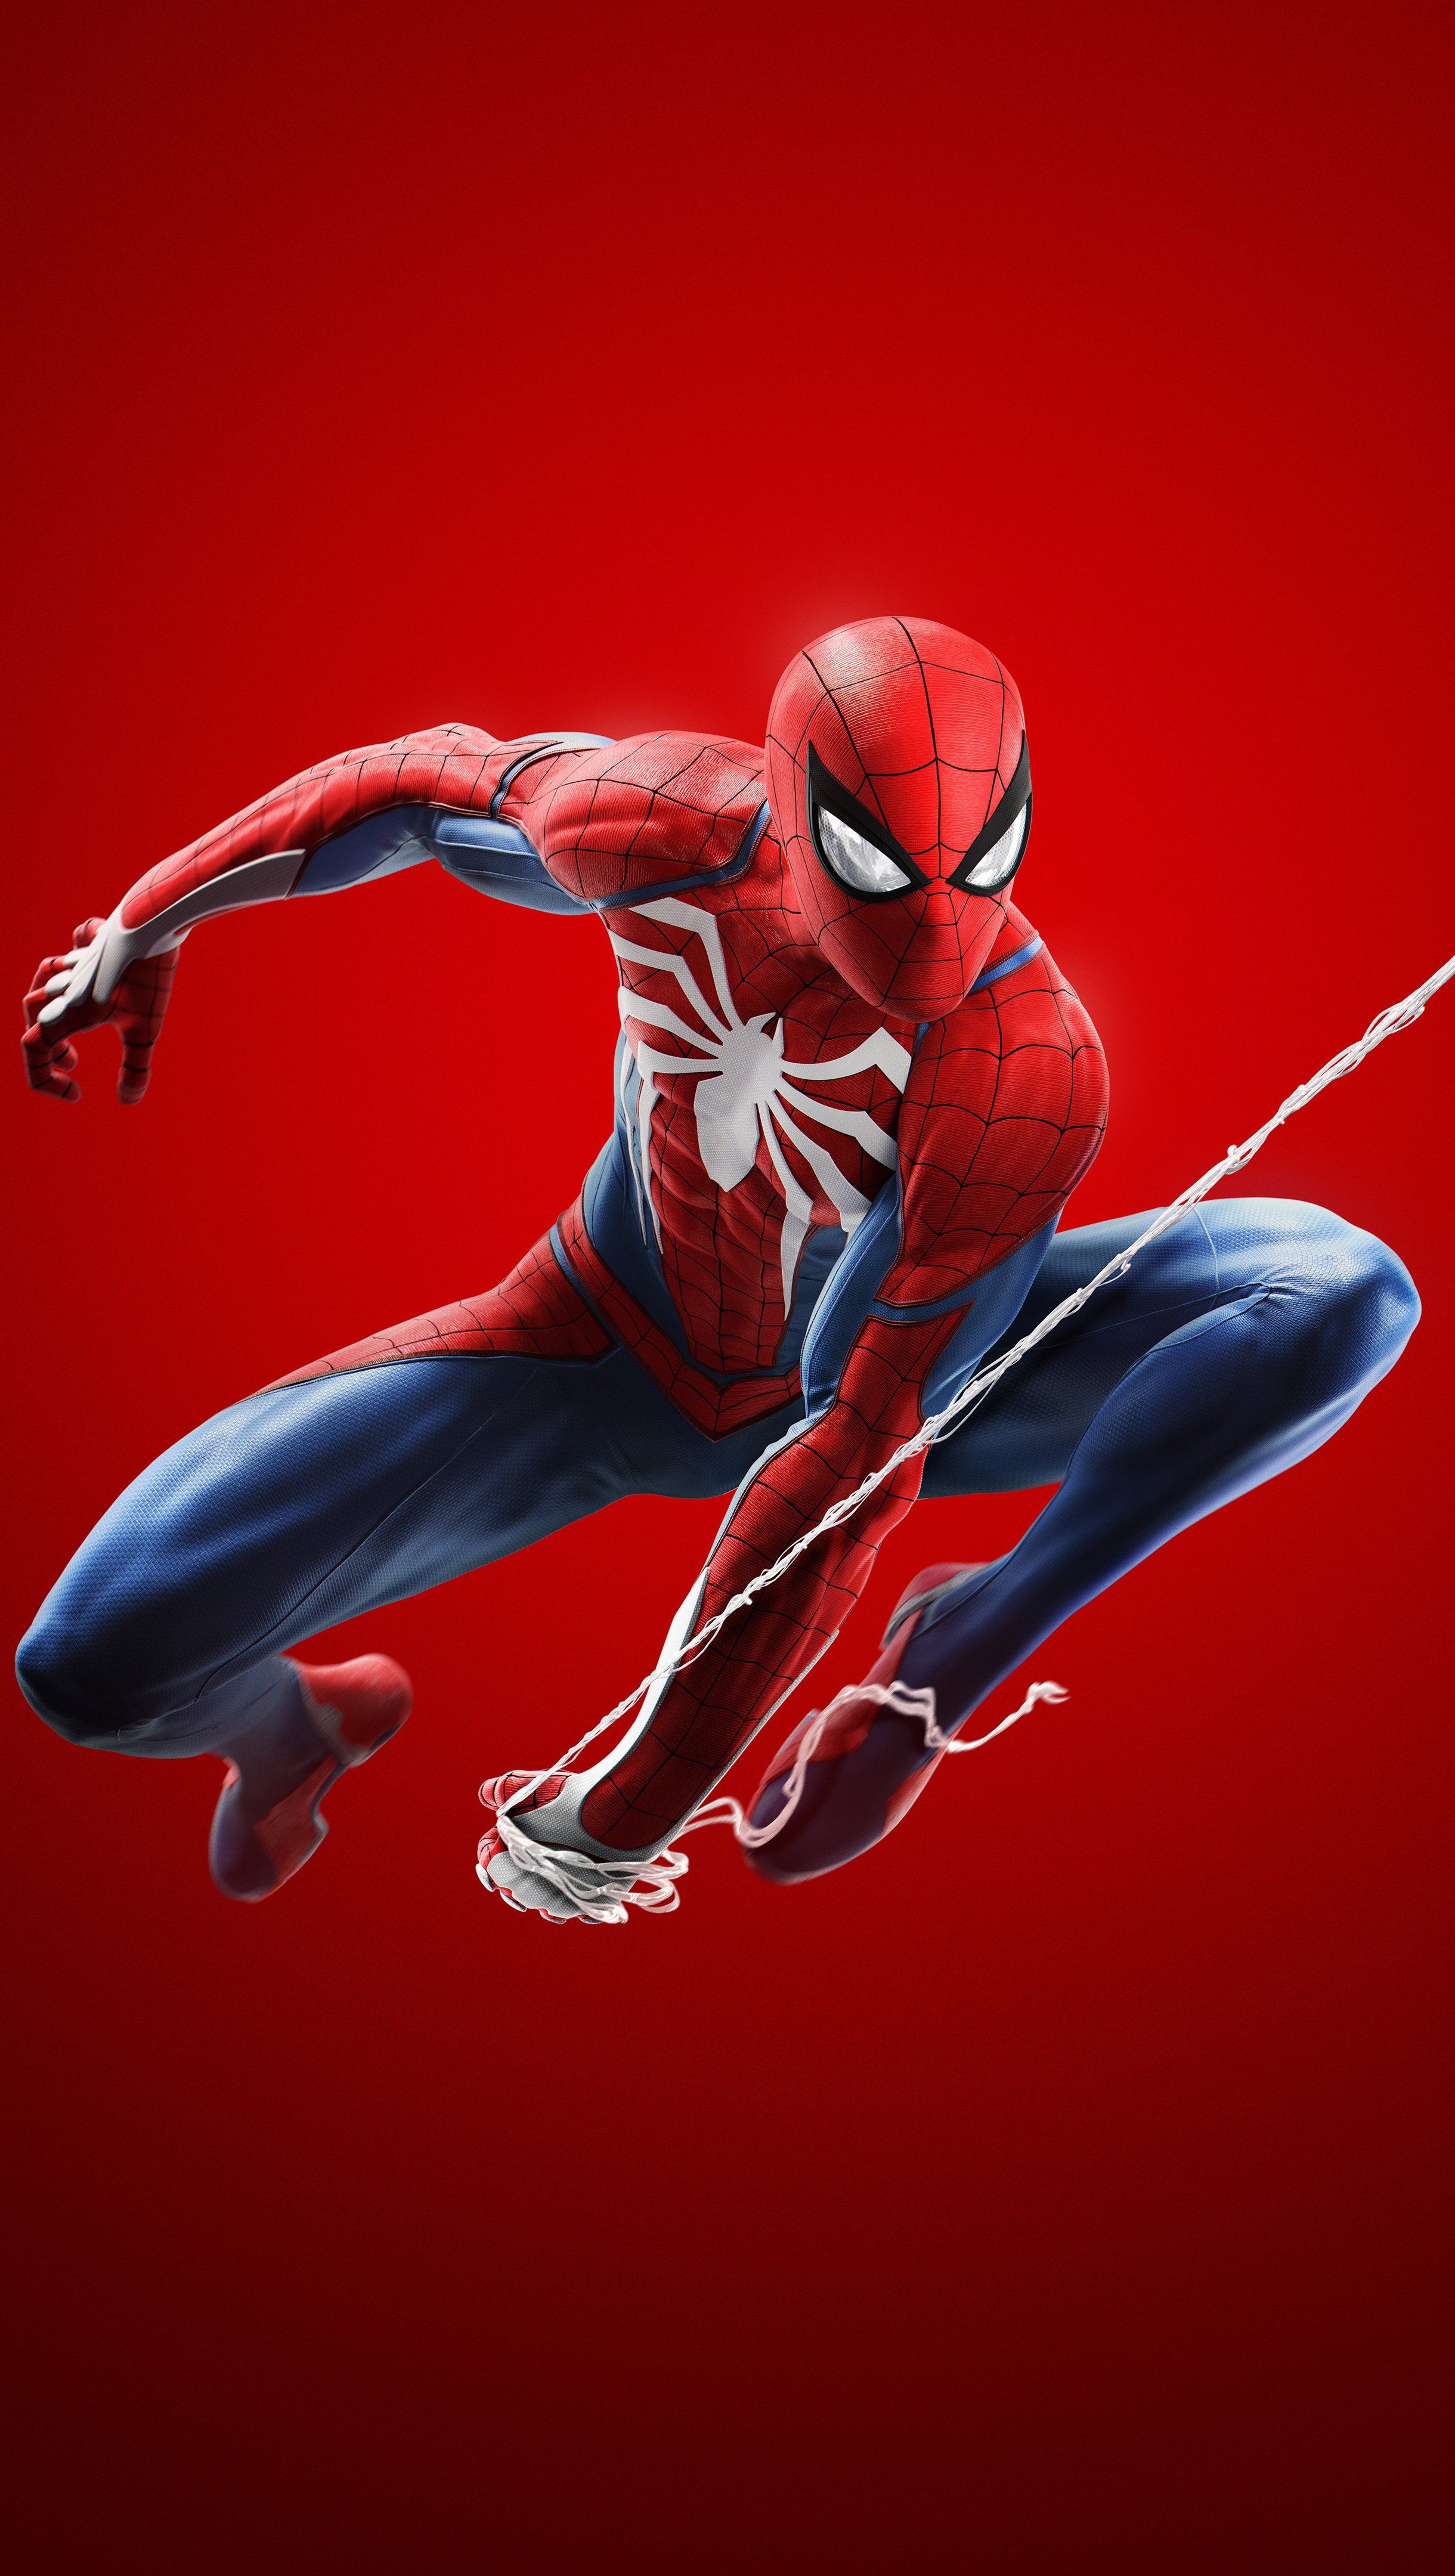 Spider Man PS4 Wallpaper 8k Ultra HD